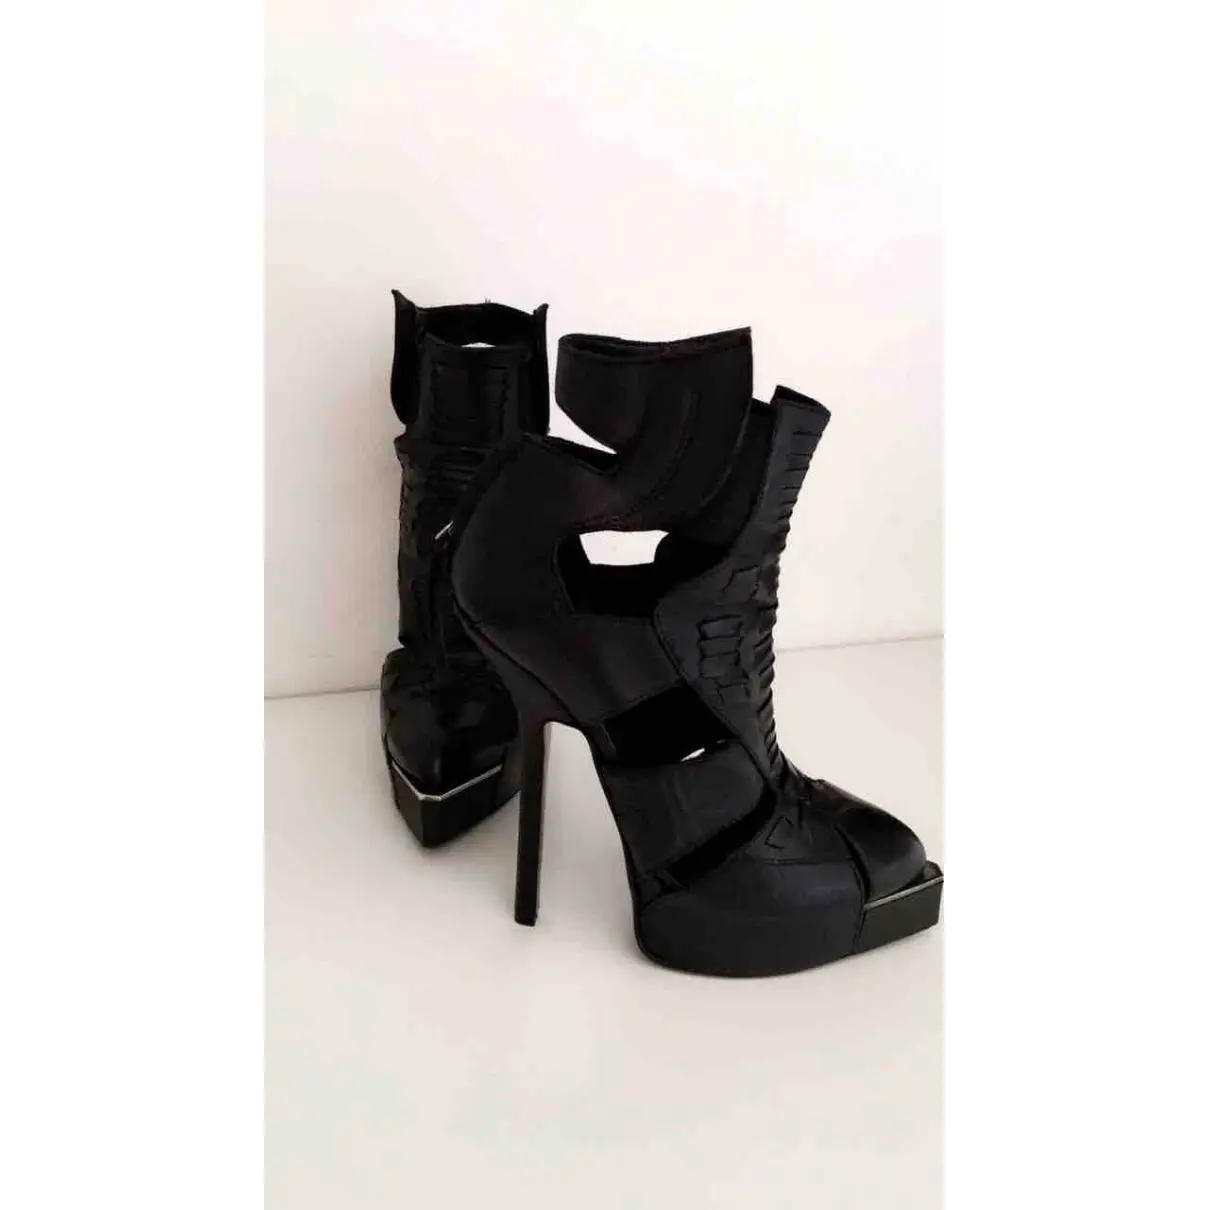 Buy Cinzia Araia Black Leather Ankle boots online